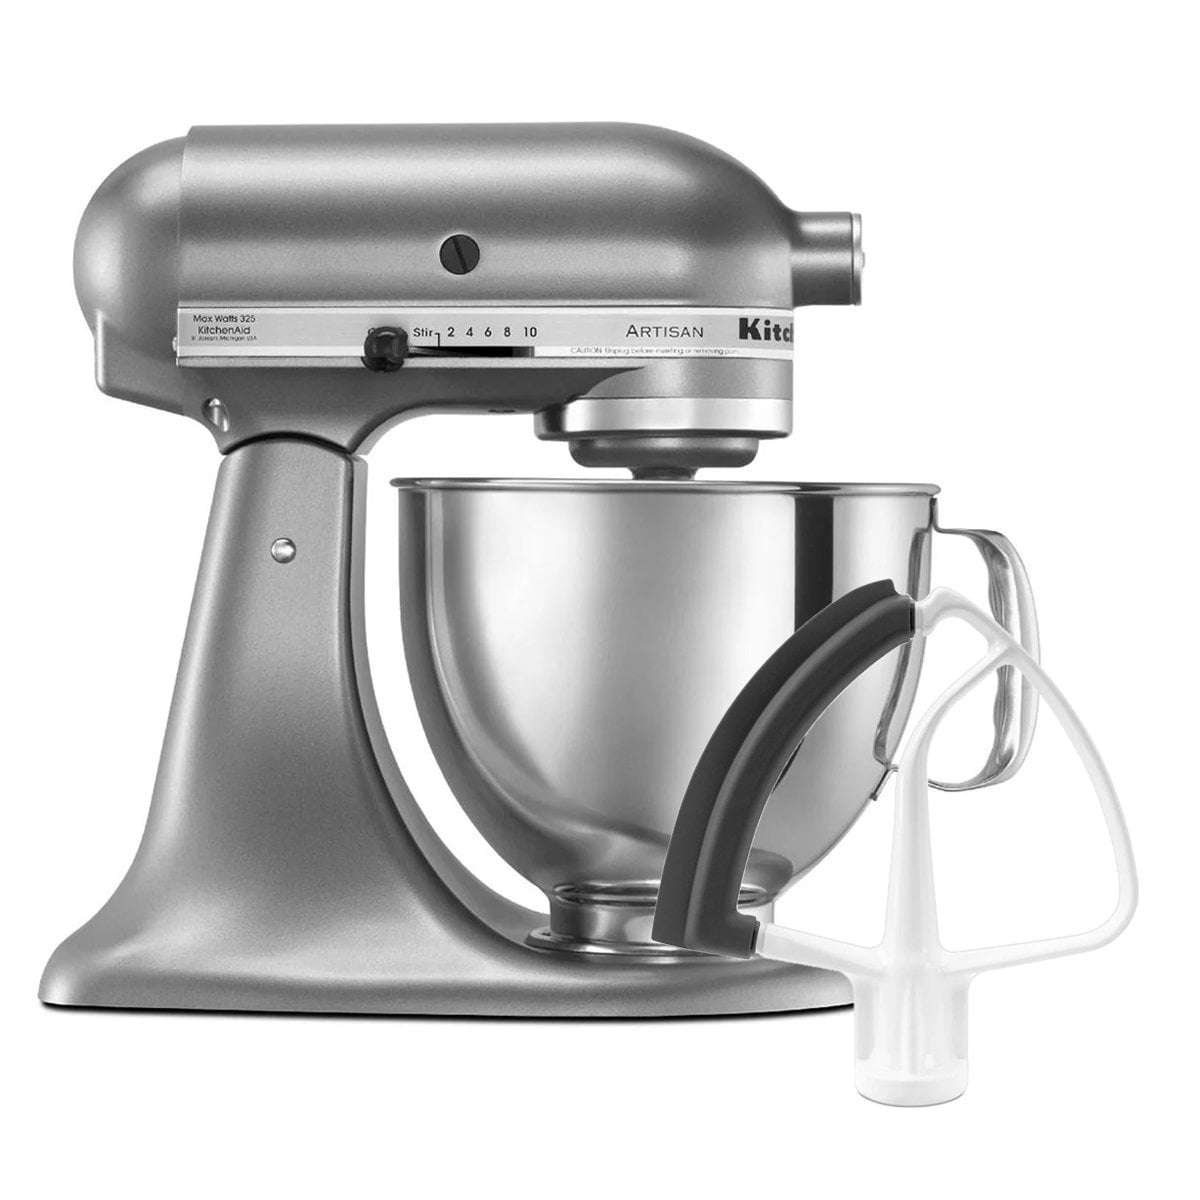 KitchenAid 5-Quart Stand Mixer + grinder attachment for $260 ($380+ value)